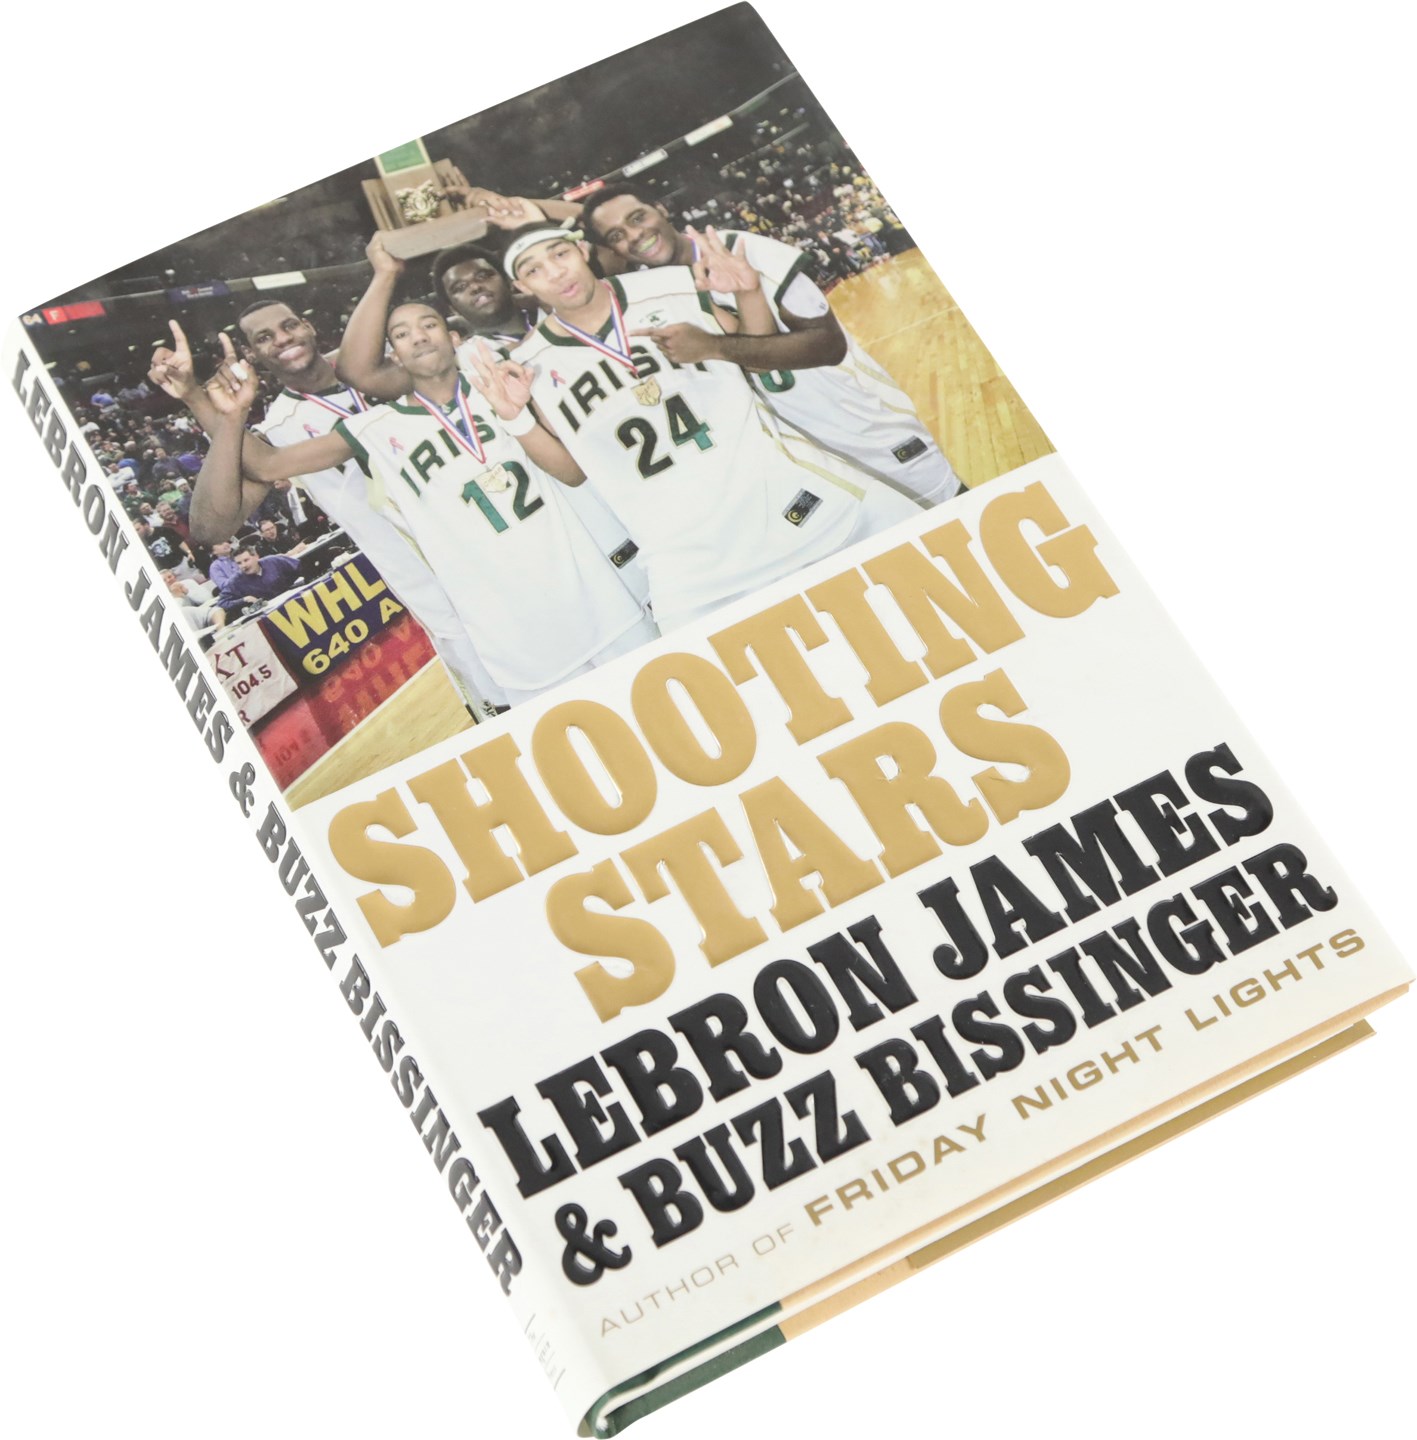 - LeBron James Signed "Shooting Stars" Hardcover Book (UDA)